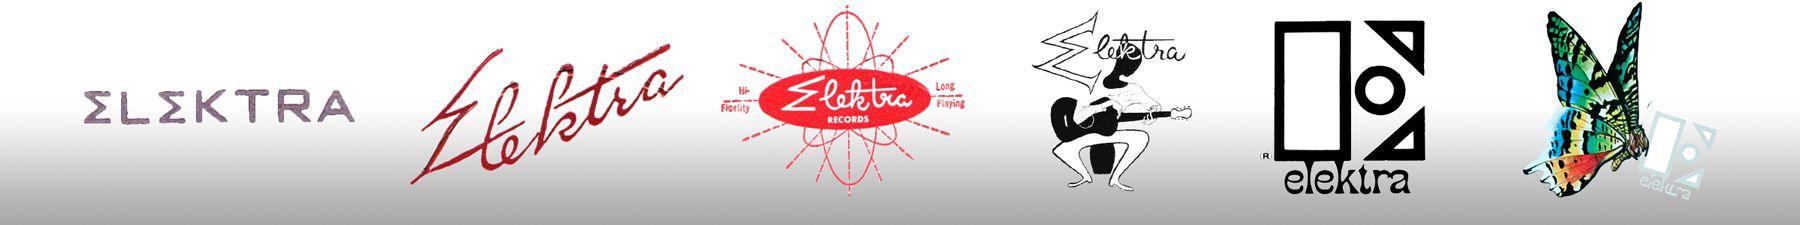 Elektra Logo - Elektra Records Master Discography - Home